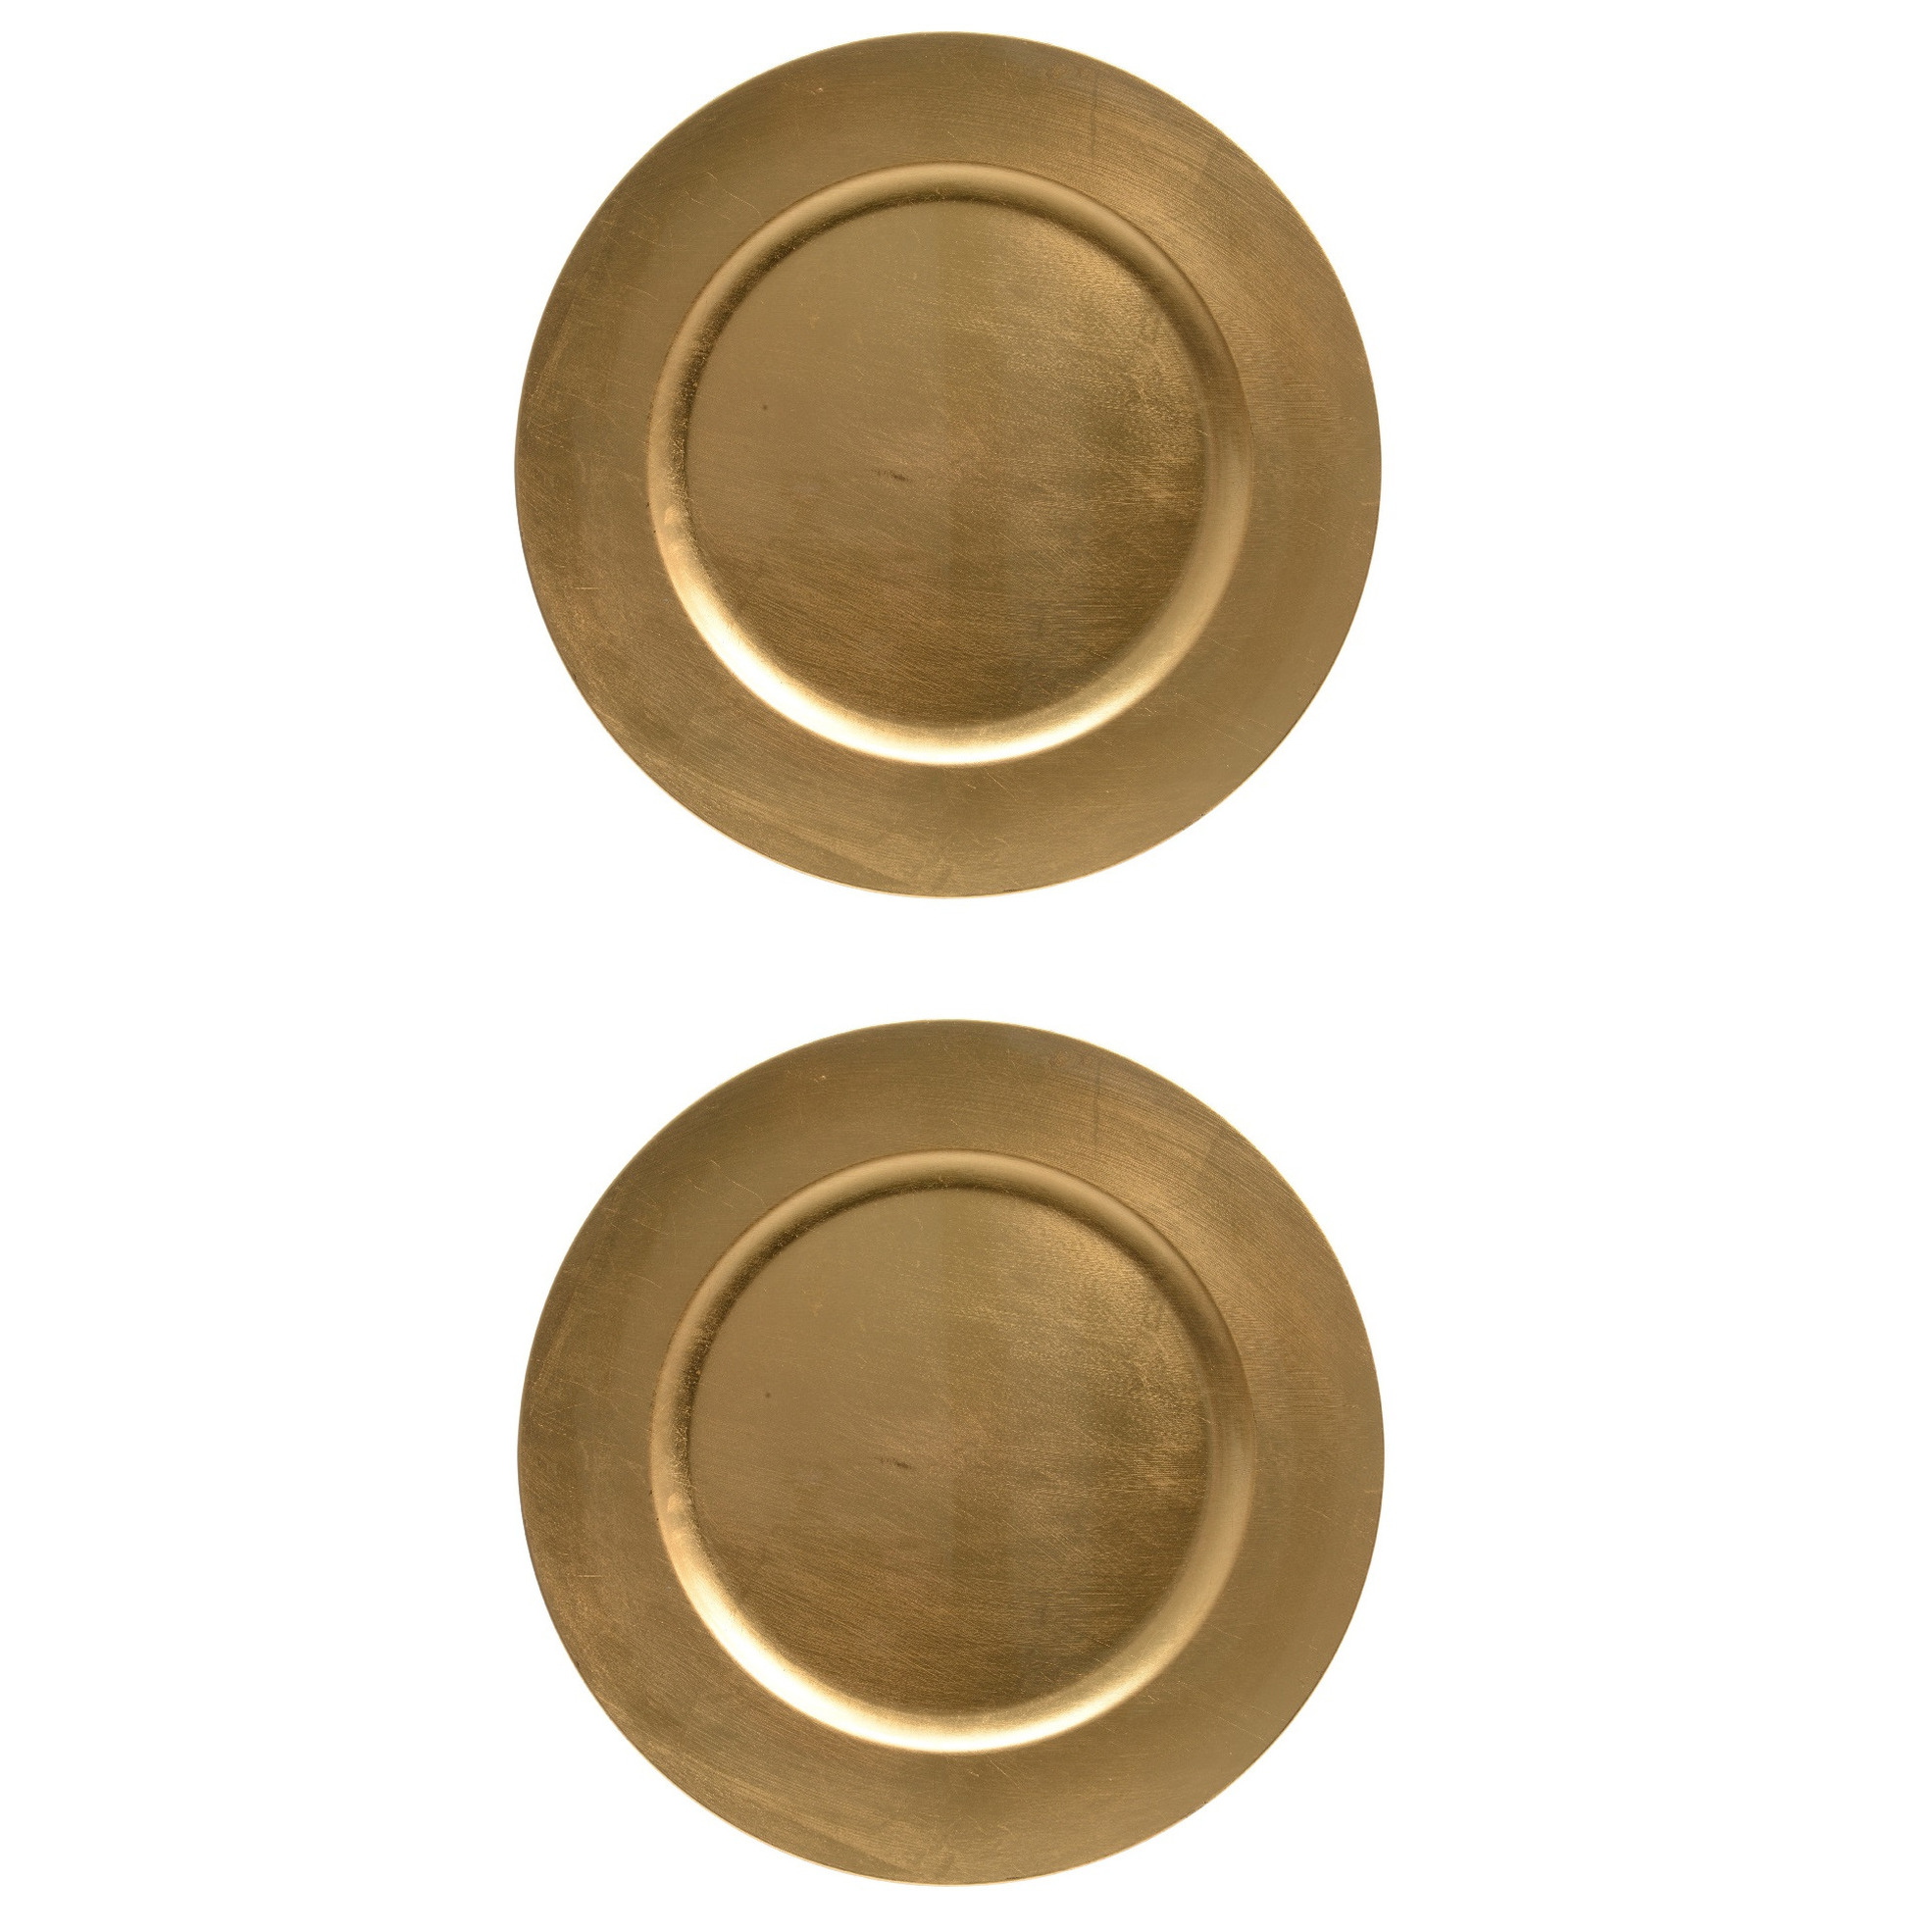 10x stuks diner borden-onderborden goud glimmend 33 cm